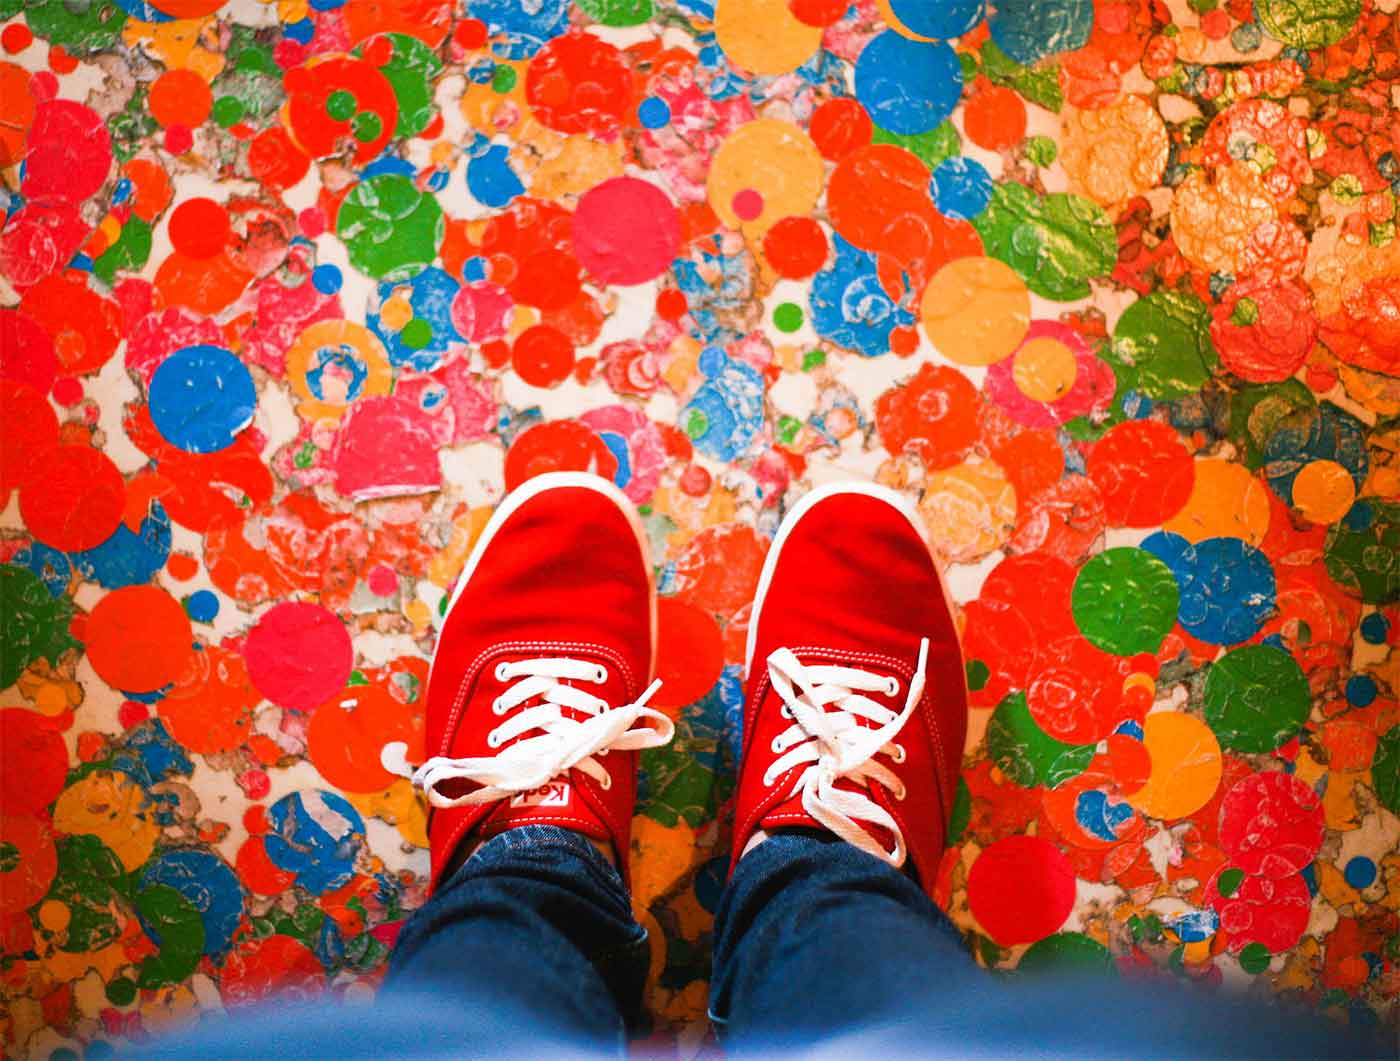 Colored floor